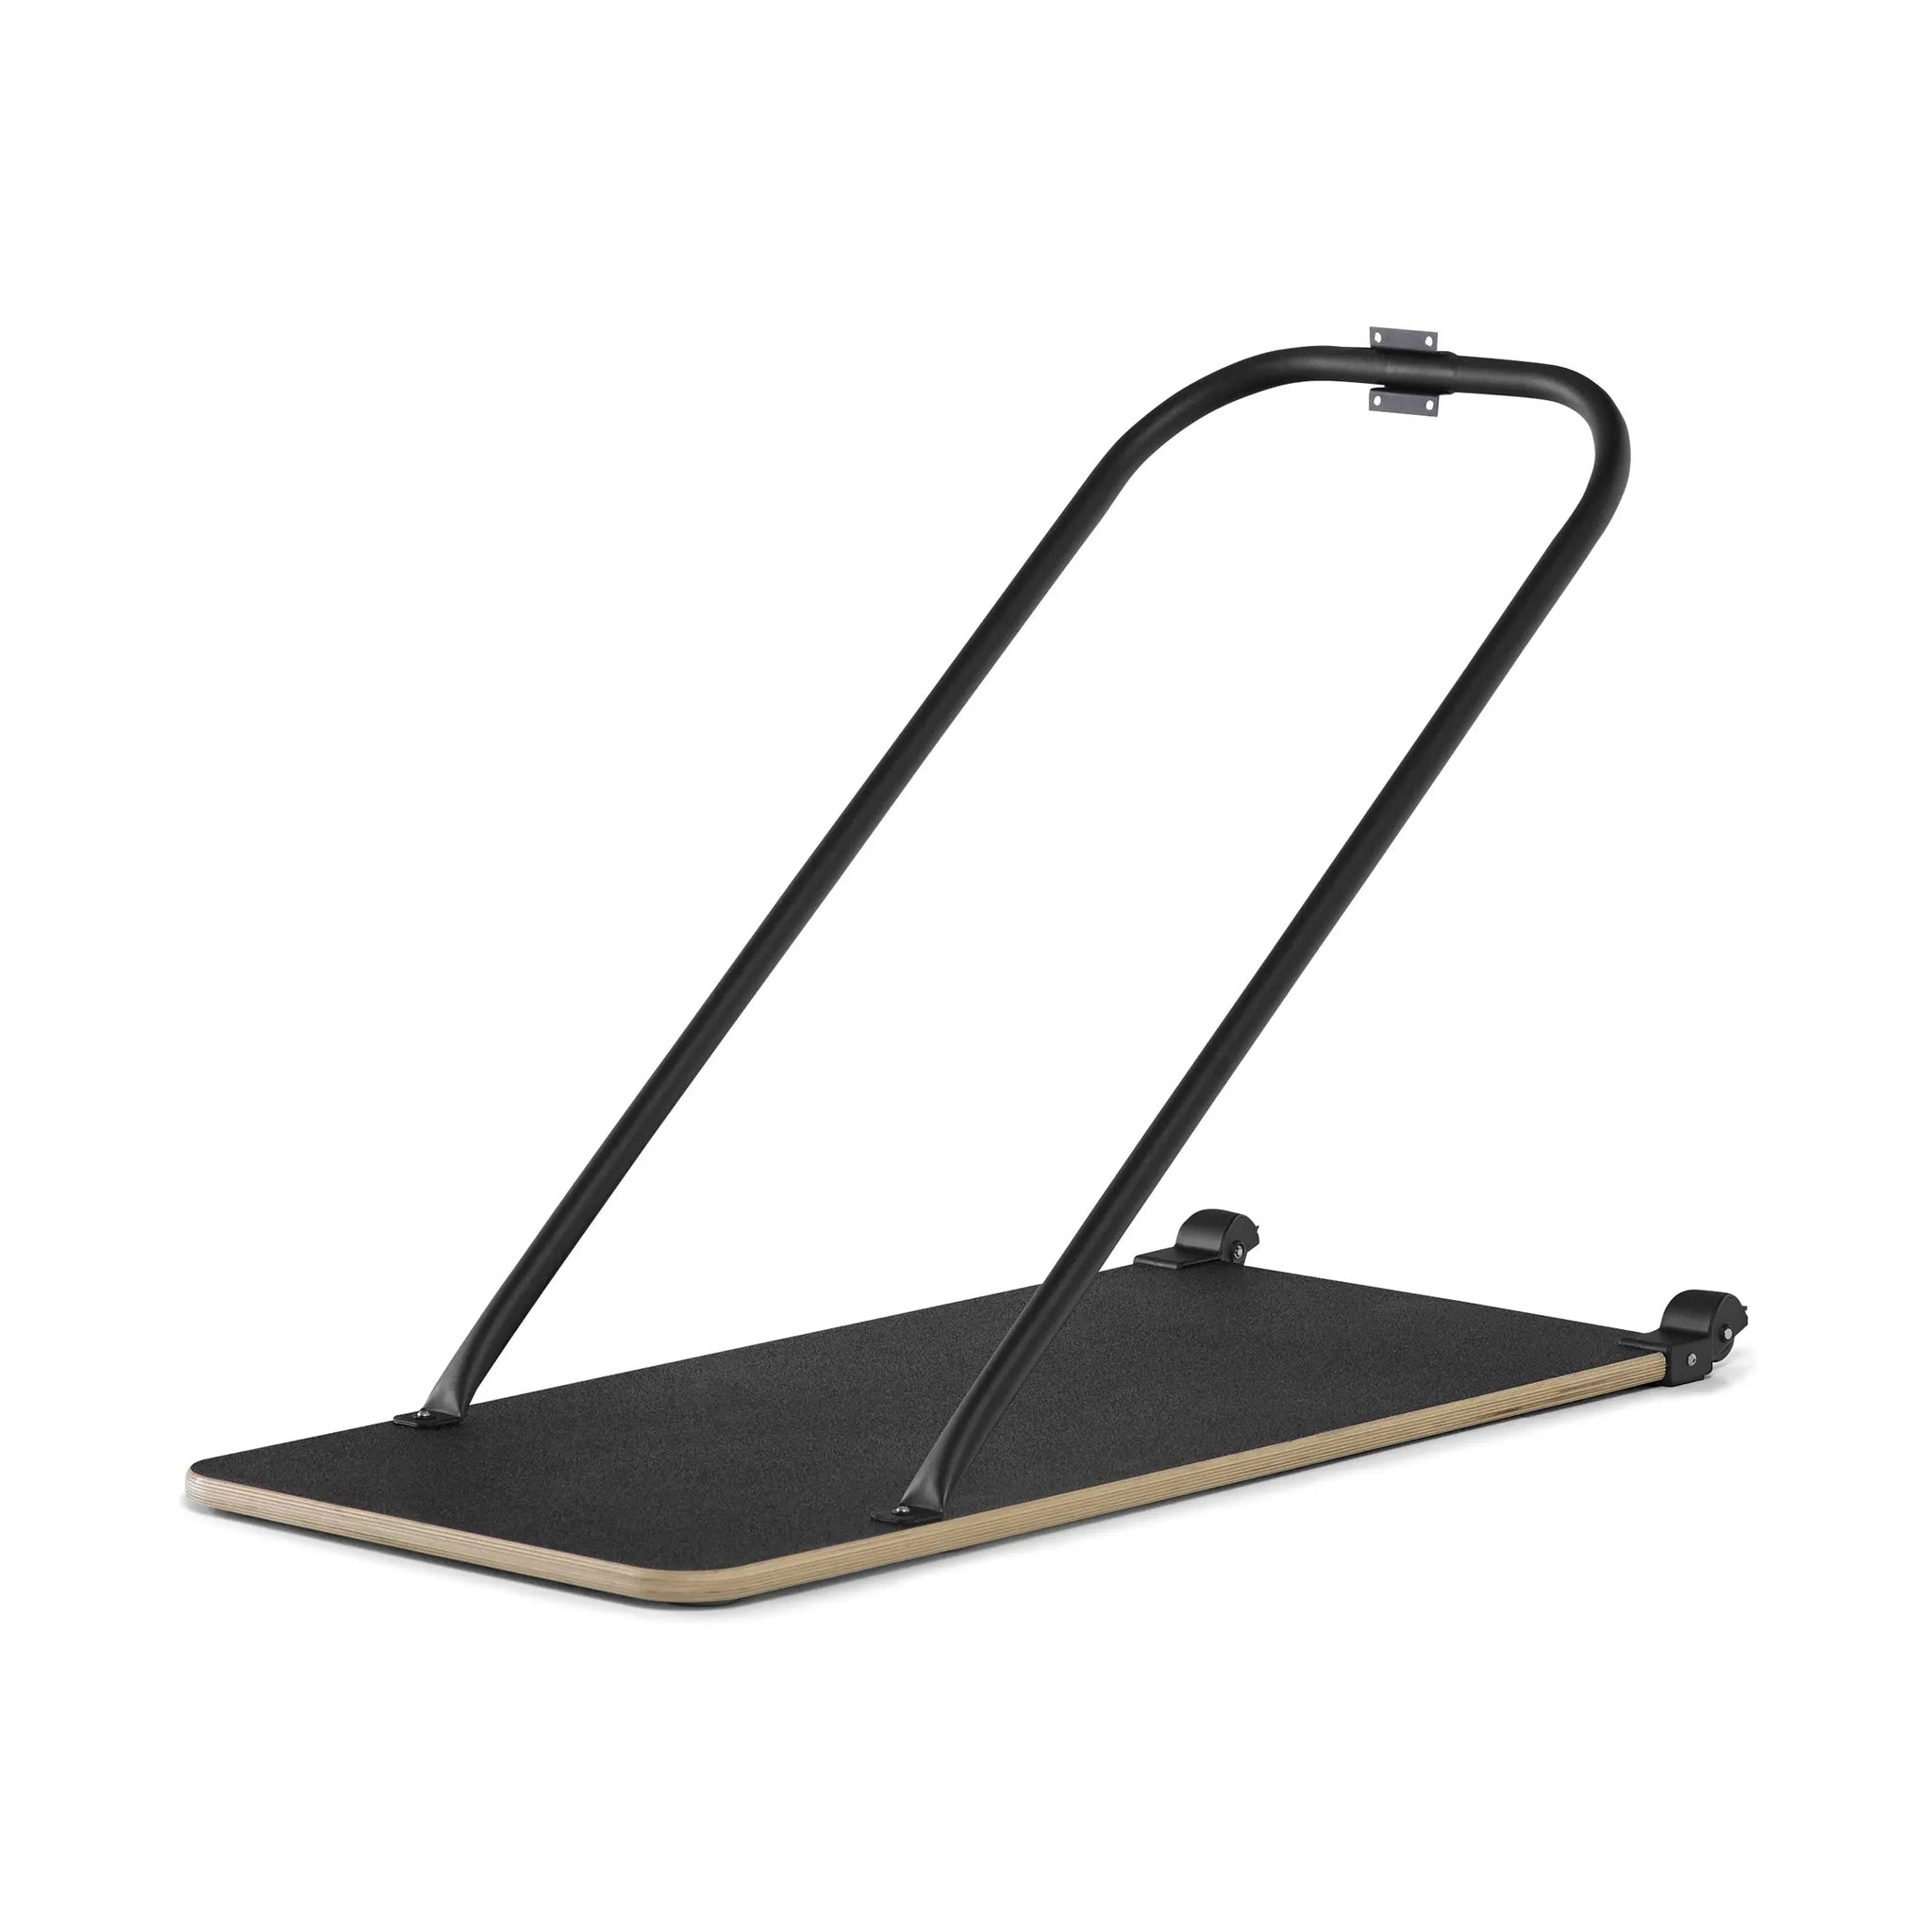 Concept 2 SkiErg Floor Stand-Rower Accessories-Concept 2-1